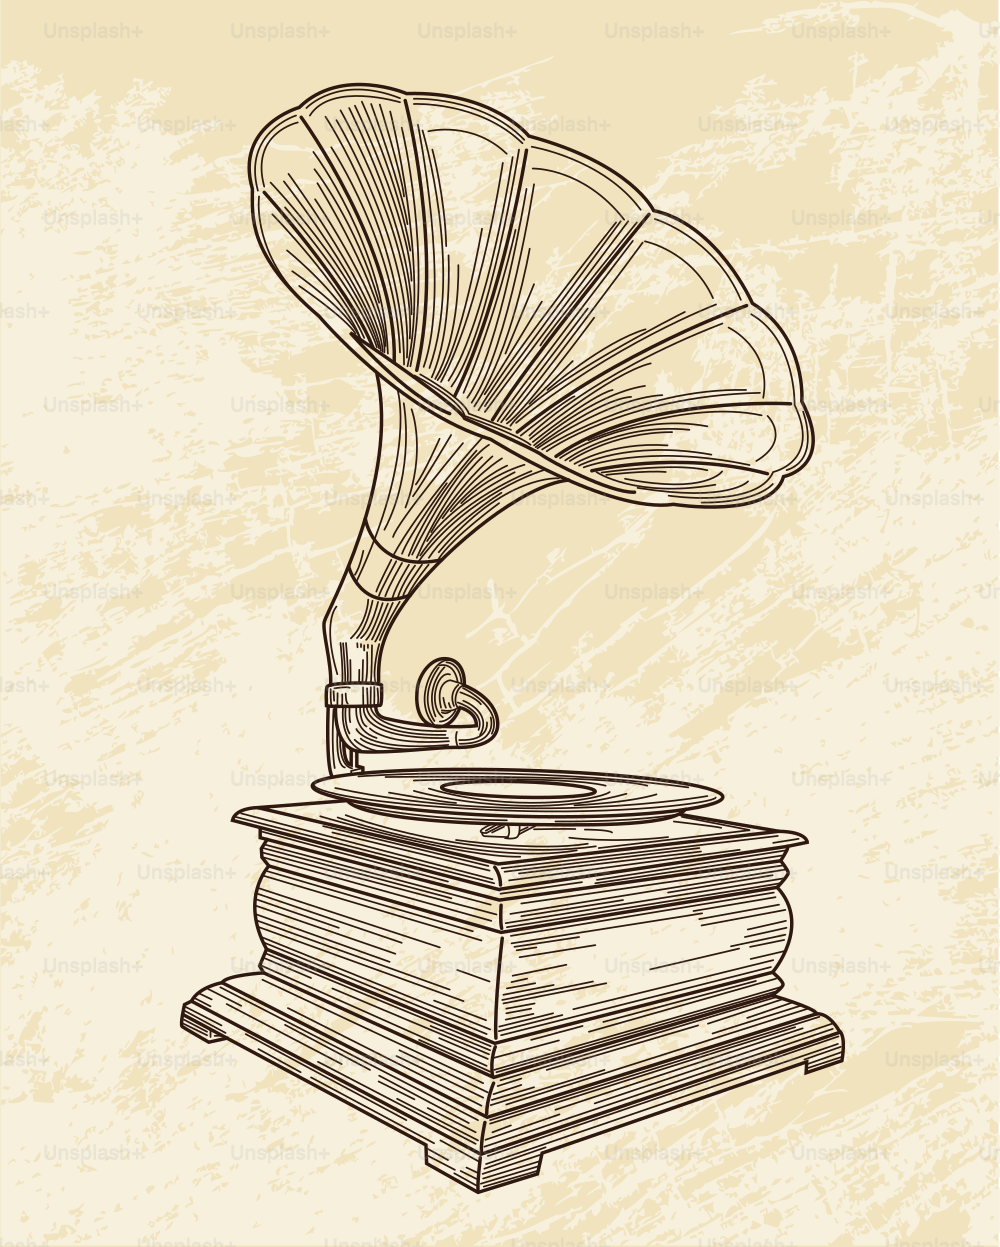 Un gramófono antiguo sobre un fondo rústico.